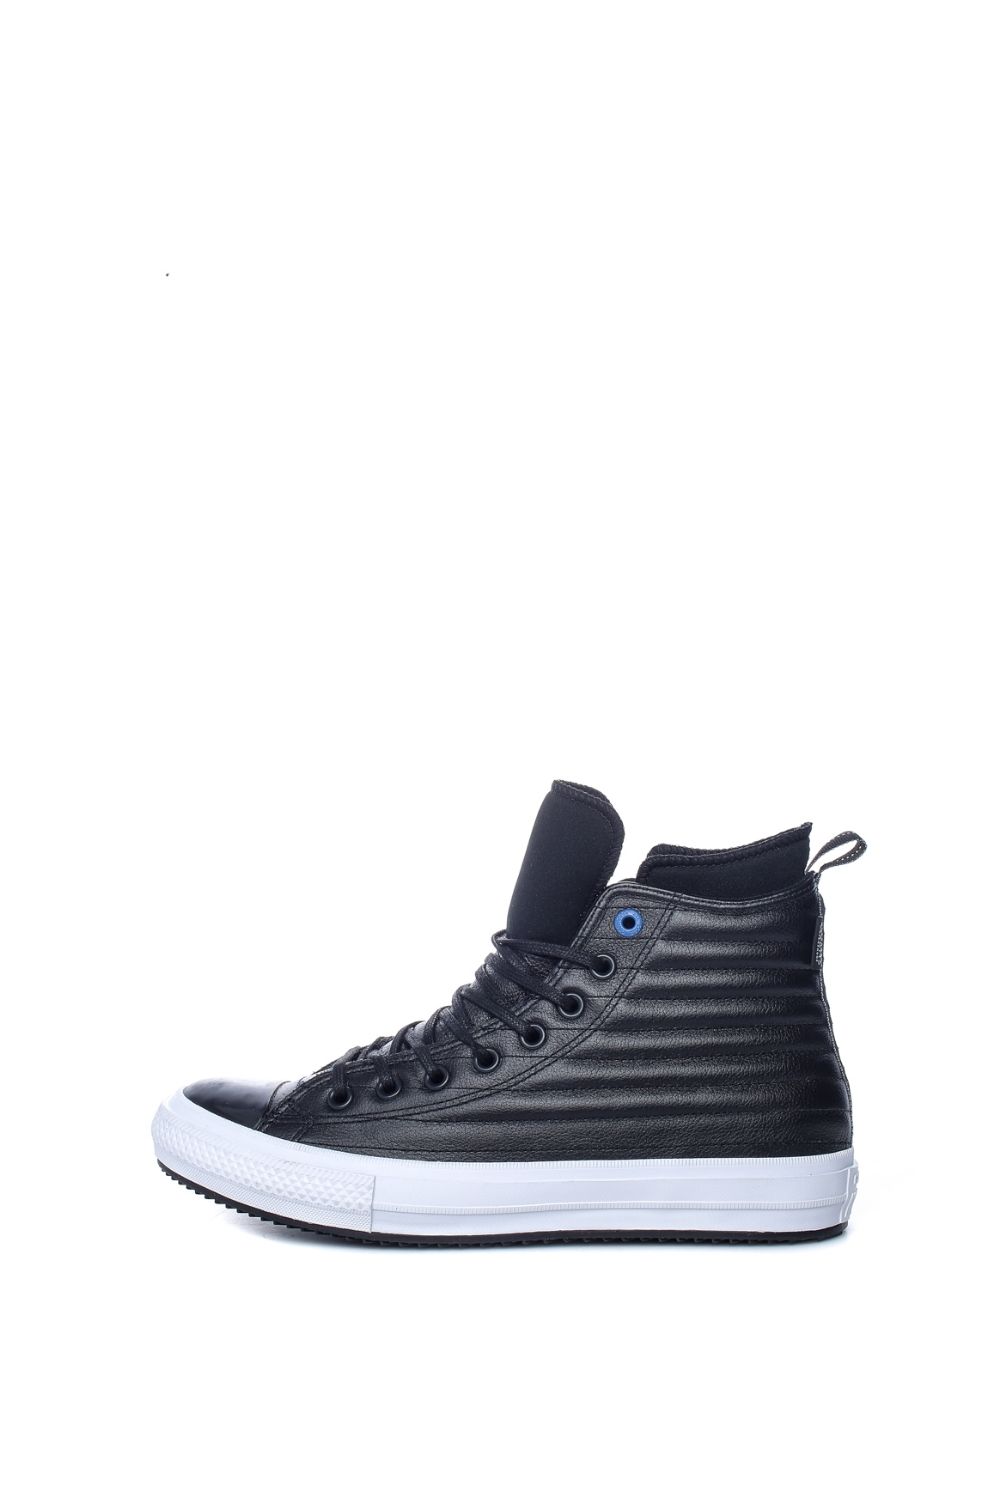 CONVERSE - Unisex μποτάκια Chuck Taylor WP Boot Hi μπλε Γυναικεία/Παπούτσια/Sneakers